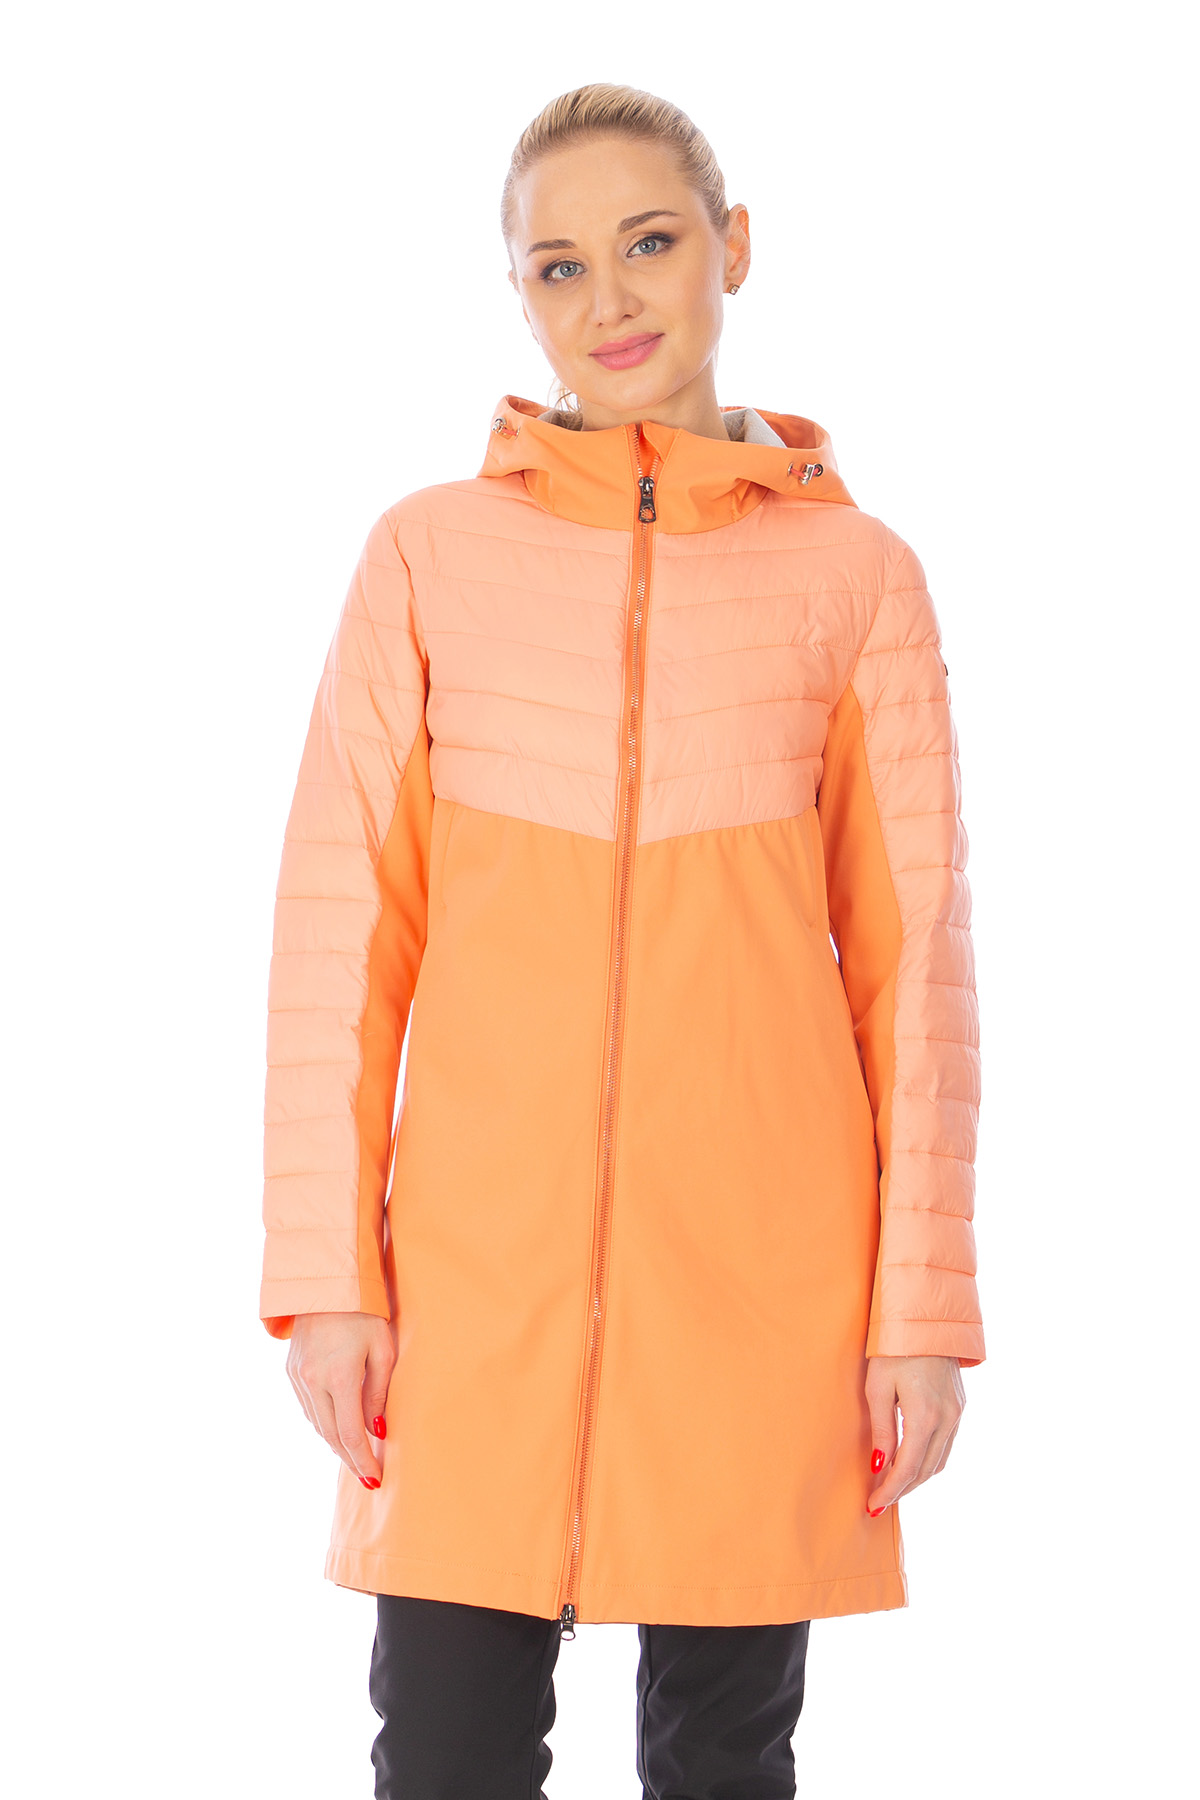 Куртка Lafor Оранжевый, 767081 (48, xl)